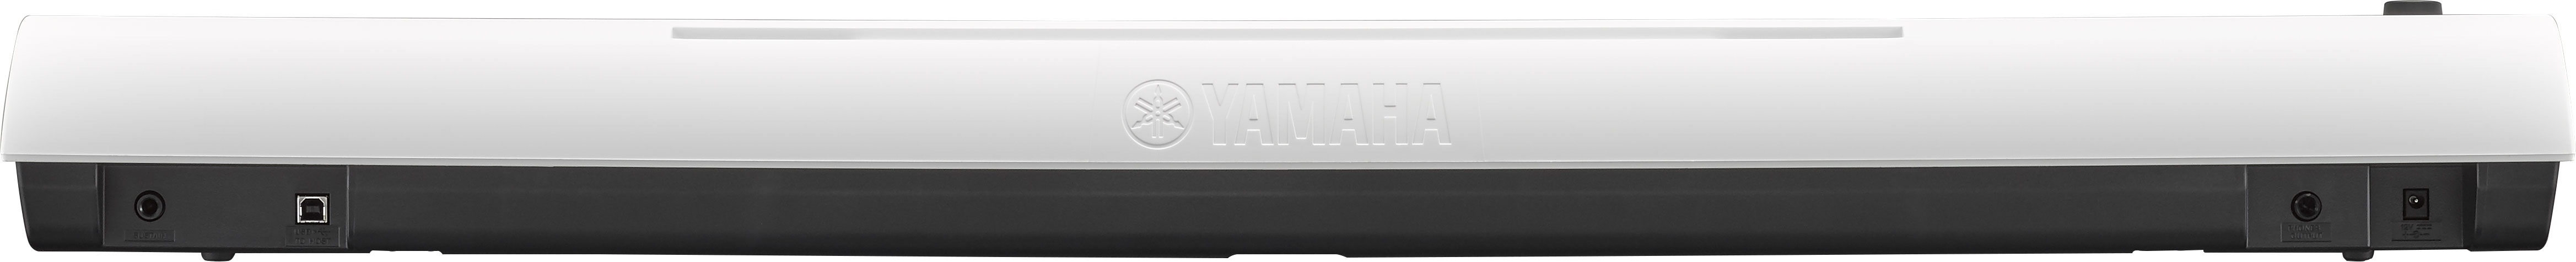 Yamaha Np-12 - White - Portable digital piano - Variation 2